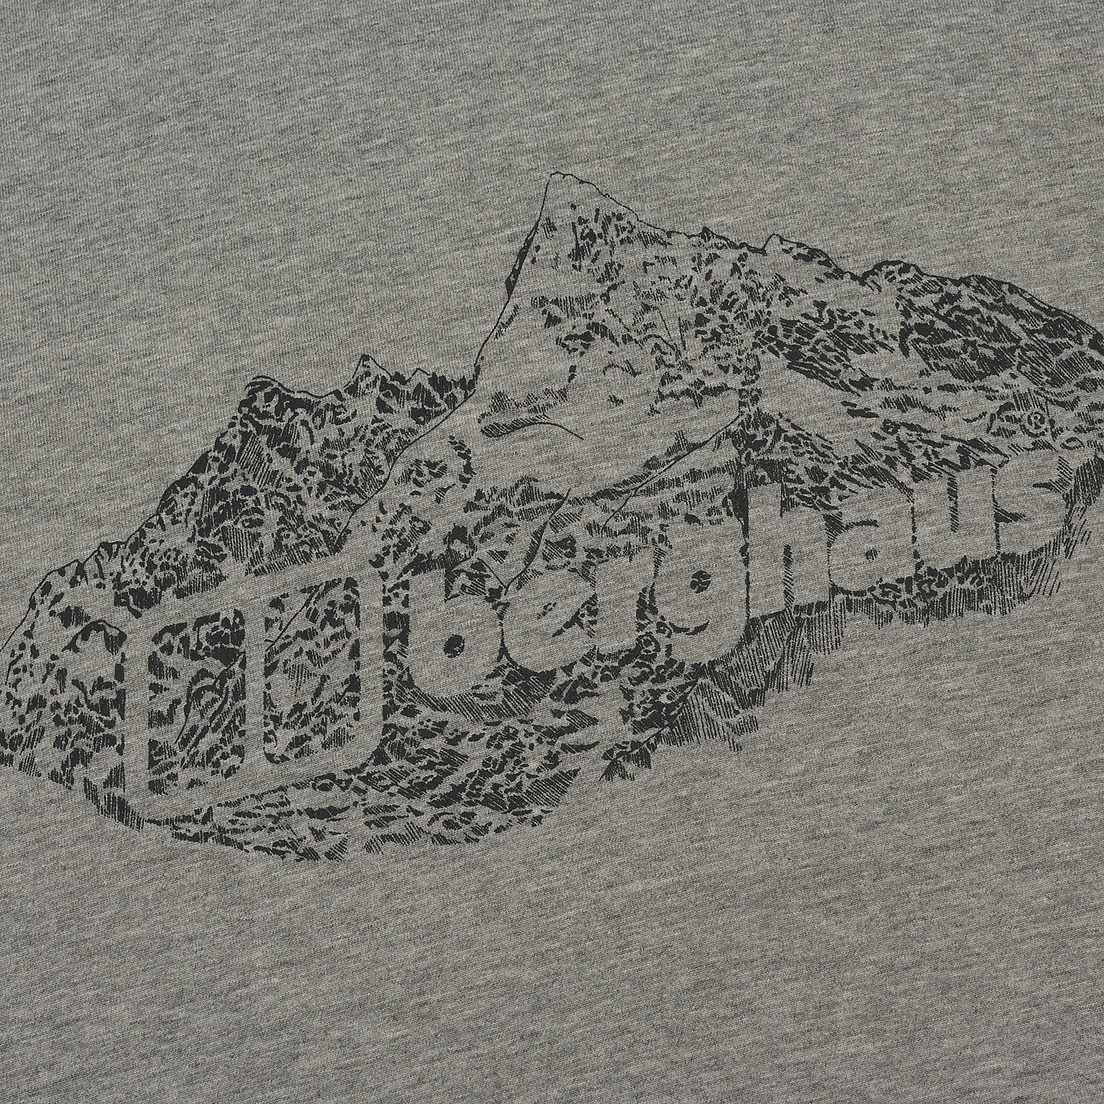 Berghaus Мужская футболка Branded Mountain